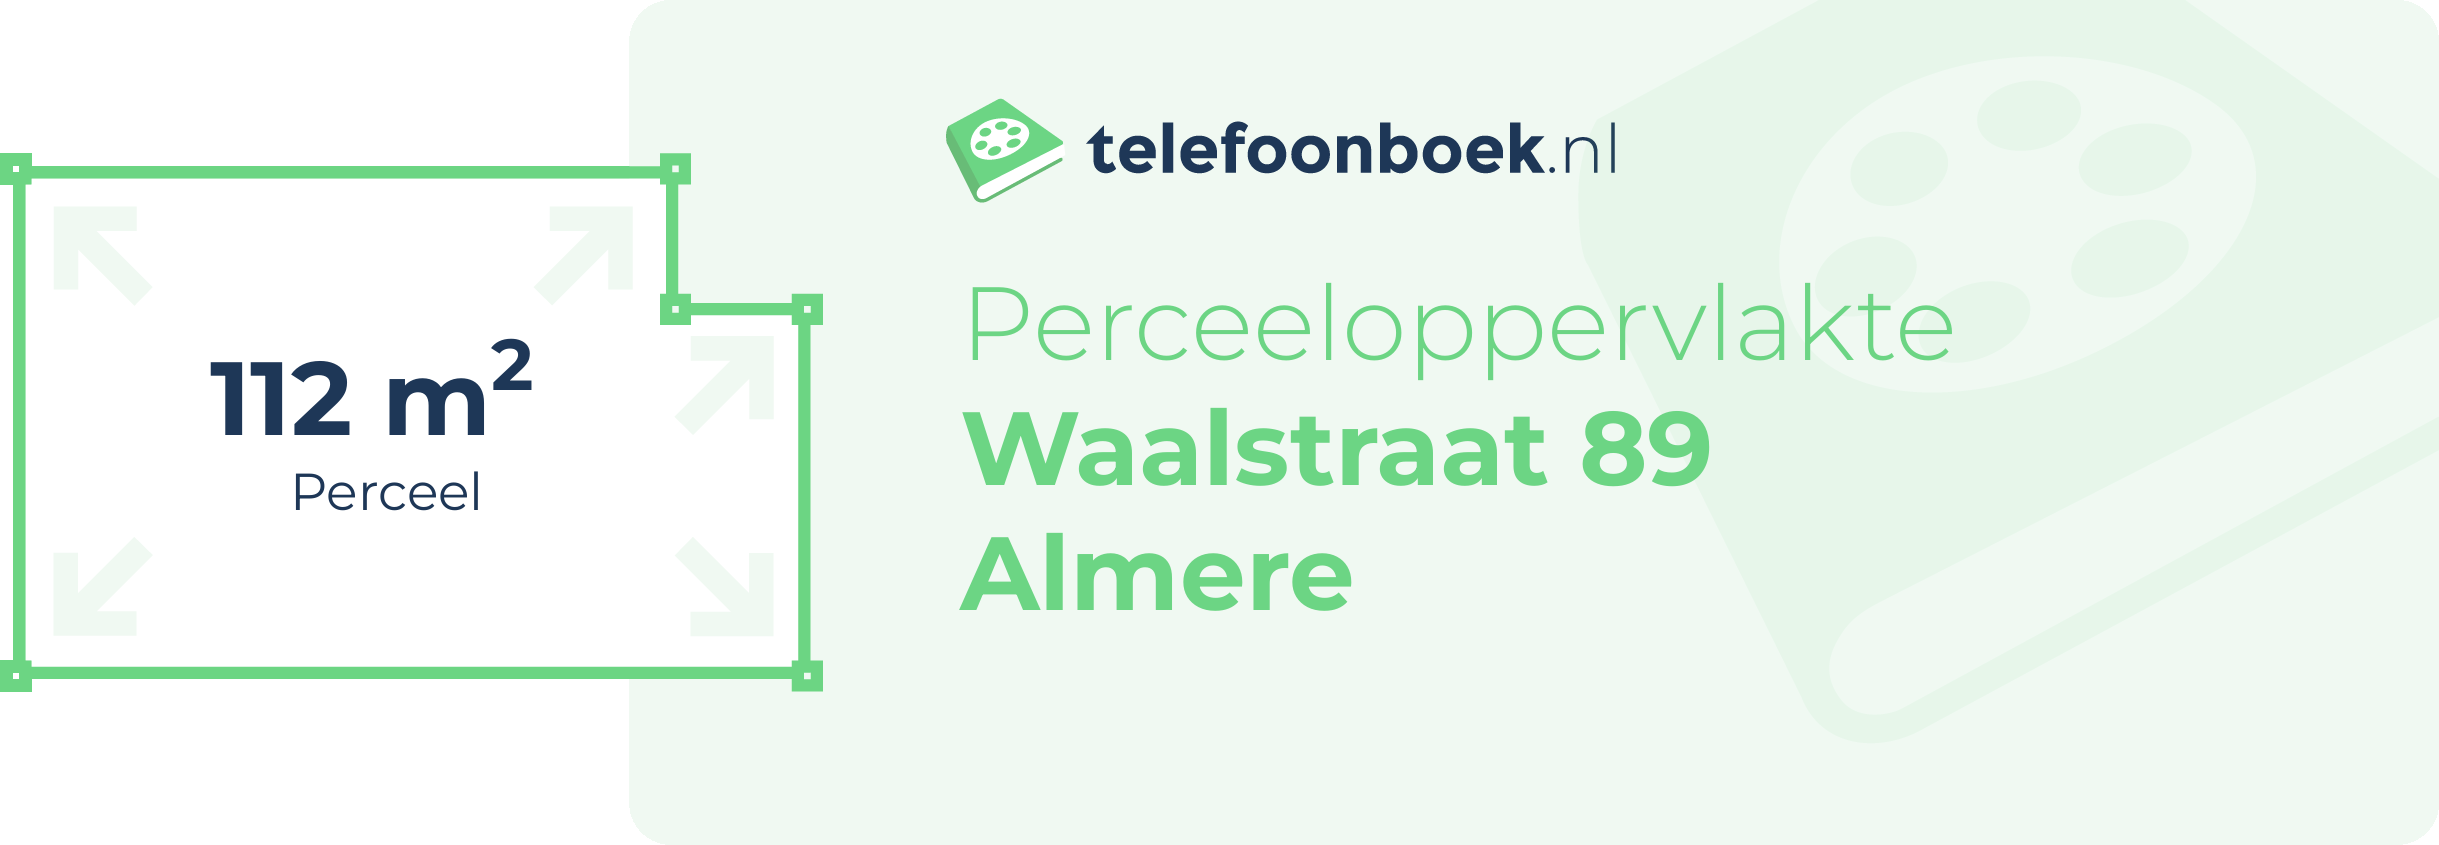 Perceeloppervlakte Waalstraat 89 Almere